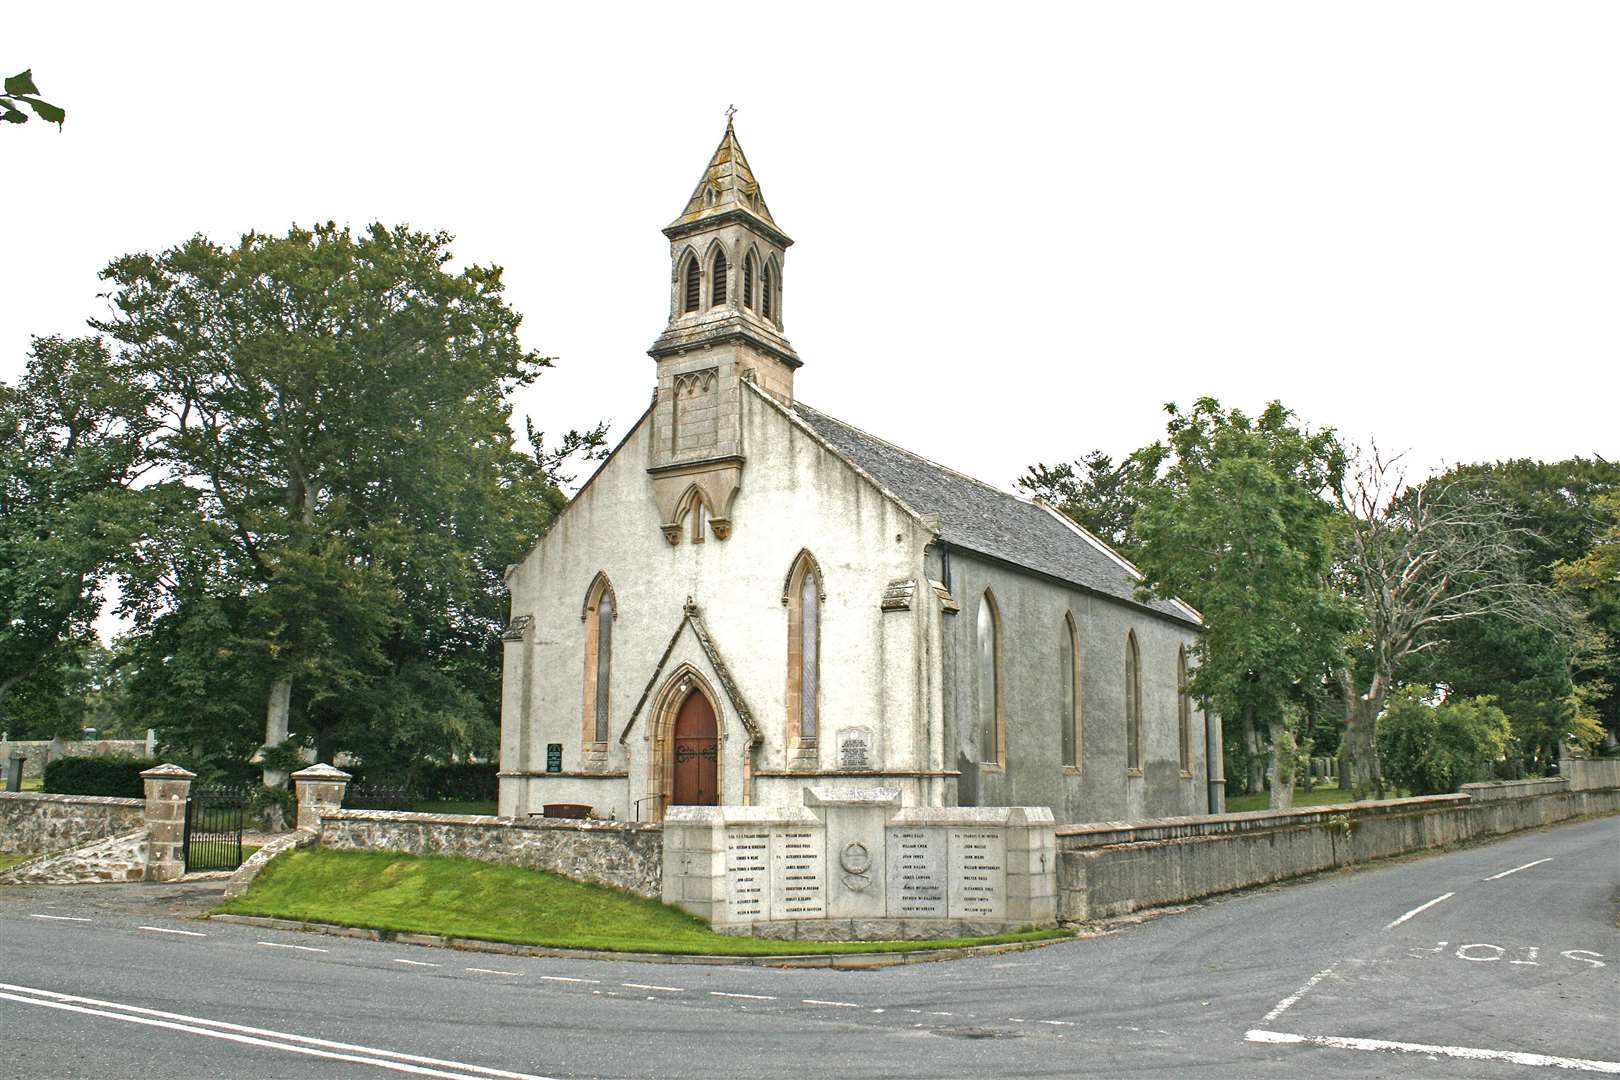 King Edward Parish Church held its final service last month.